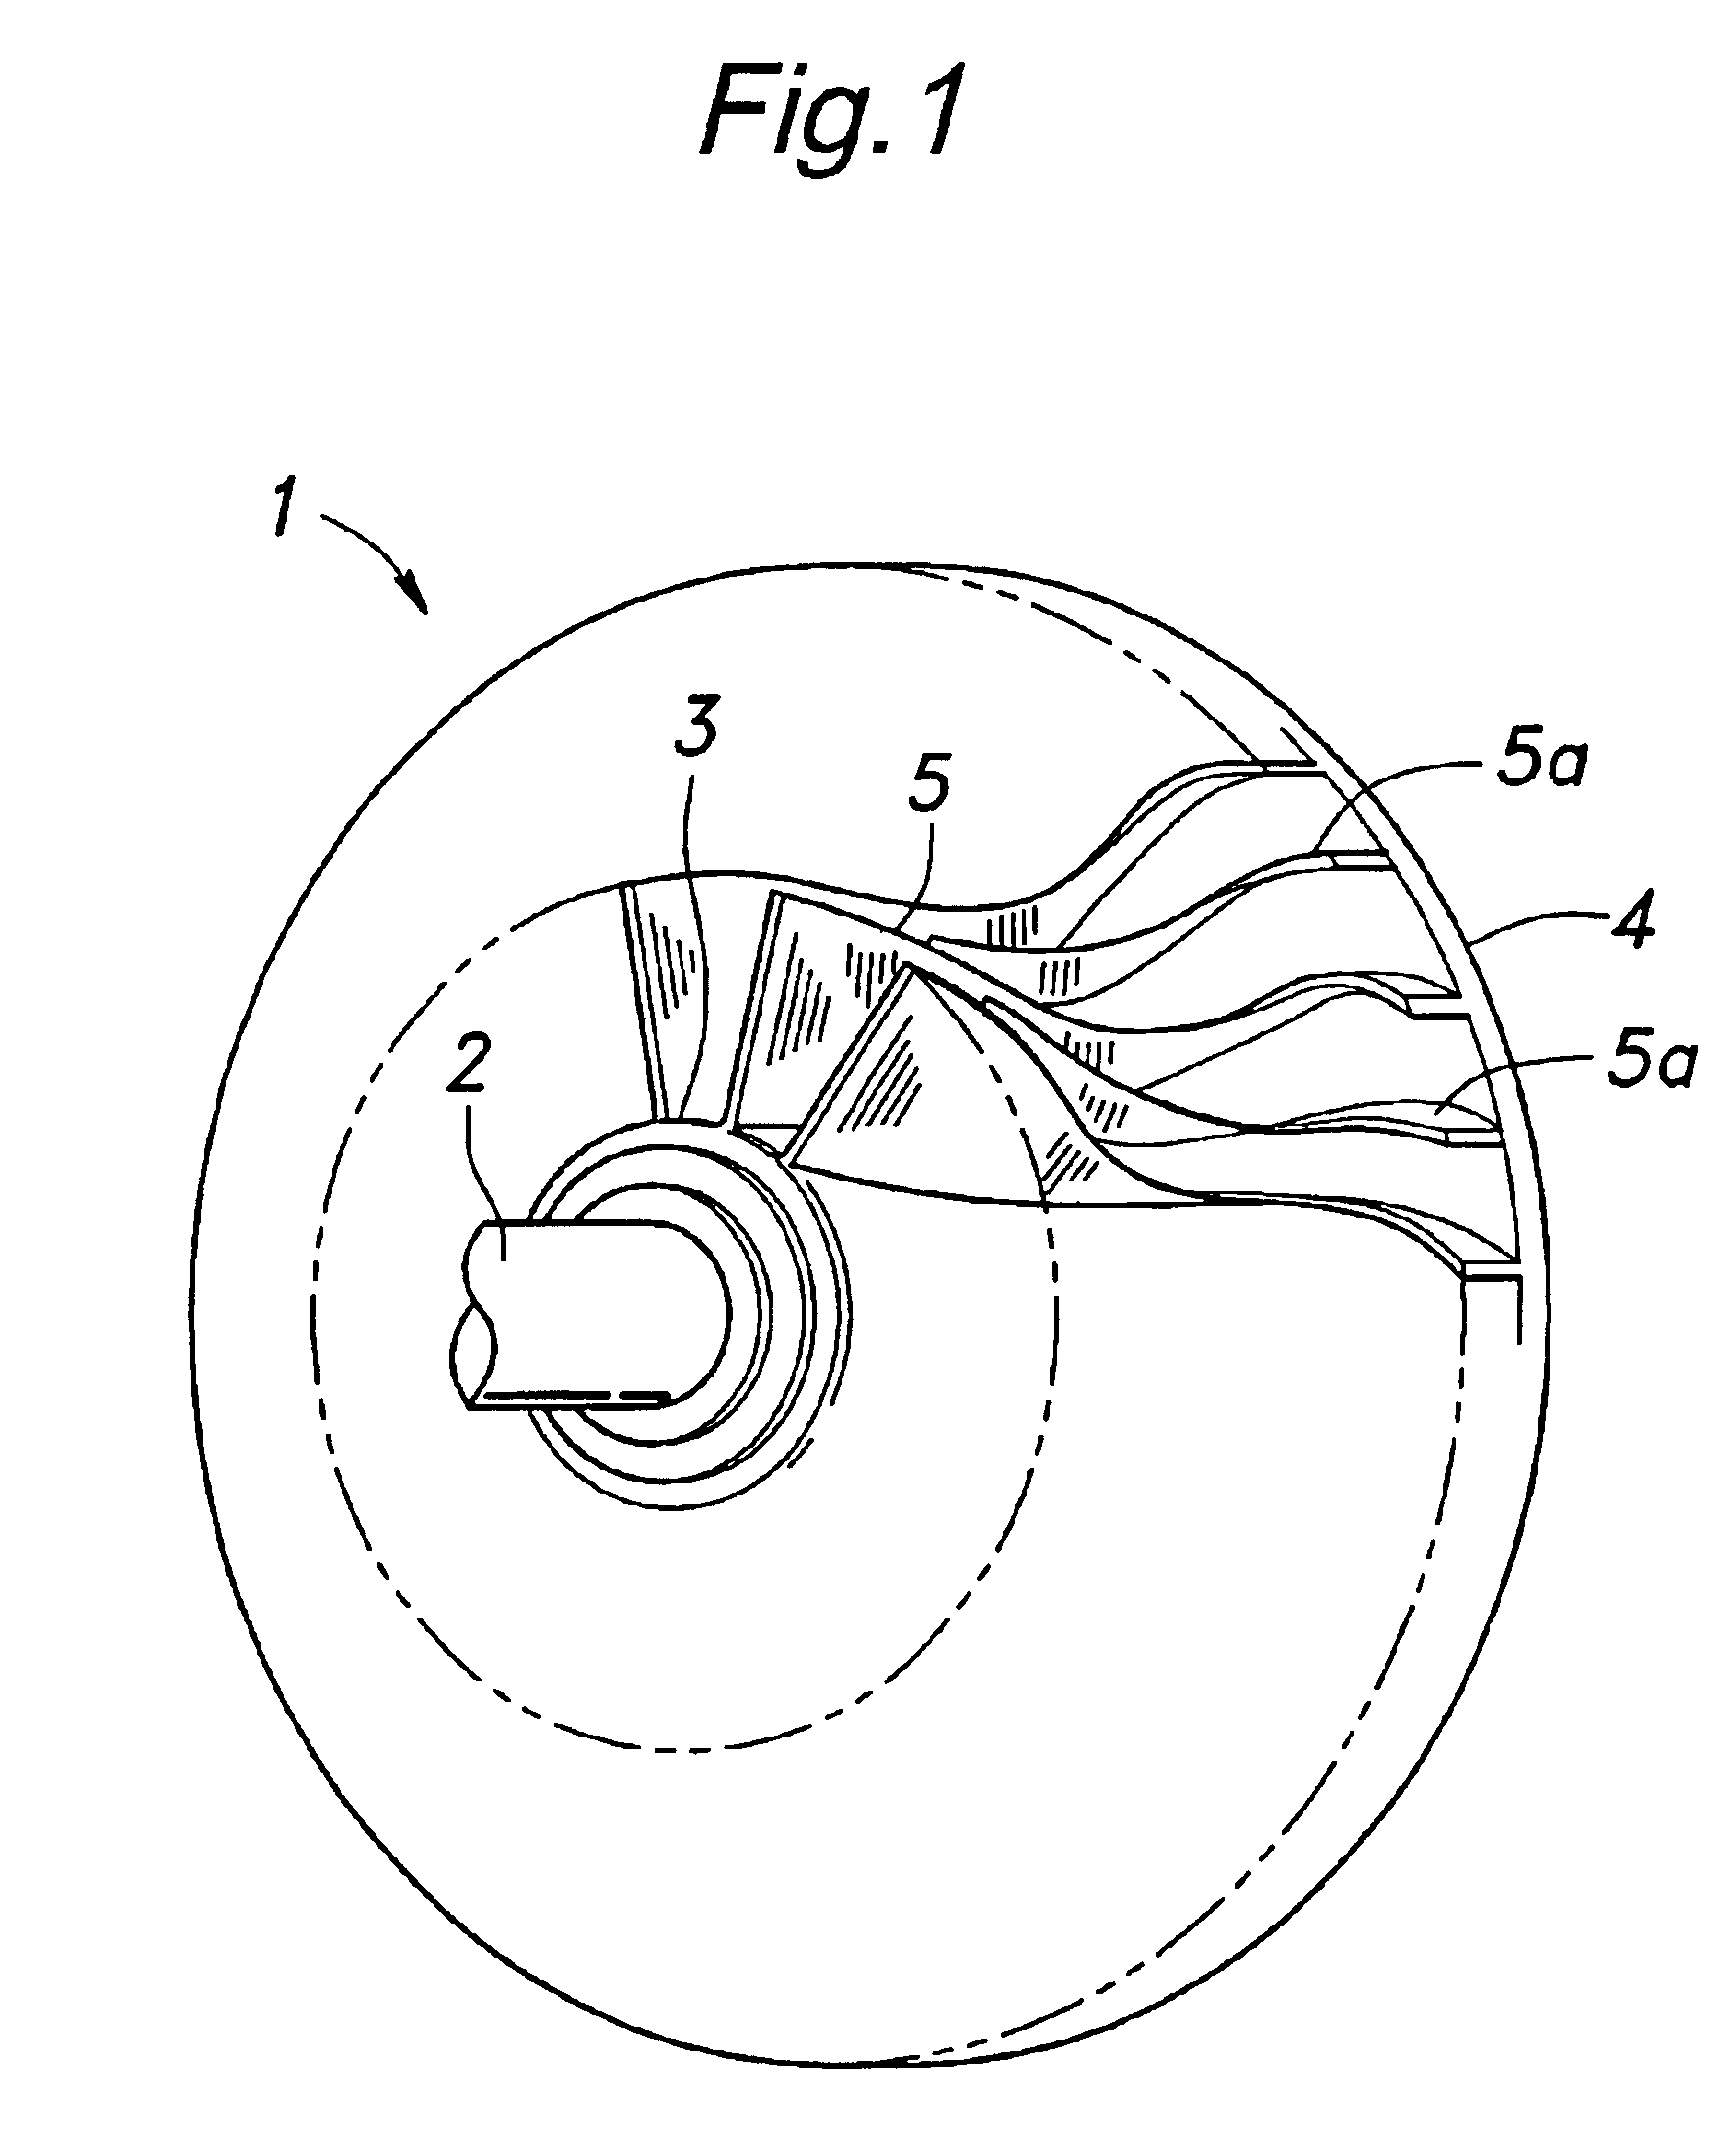 Impeller for centrifugal compressors